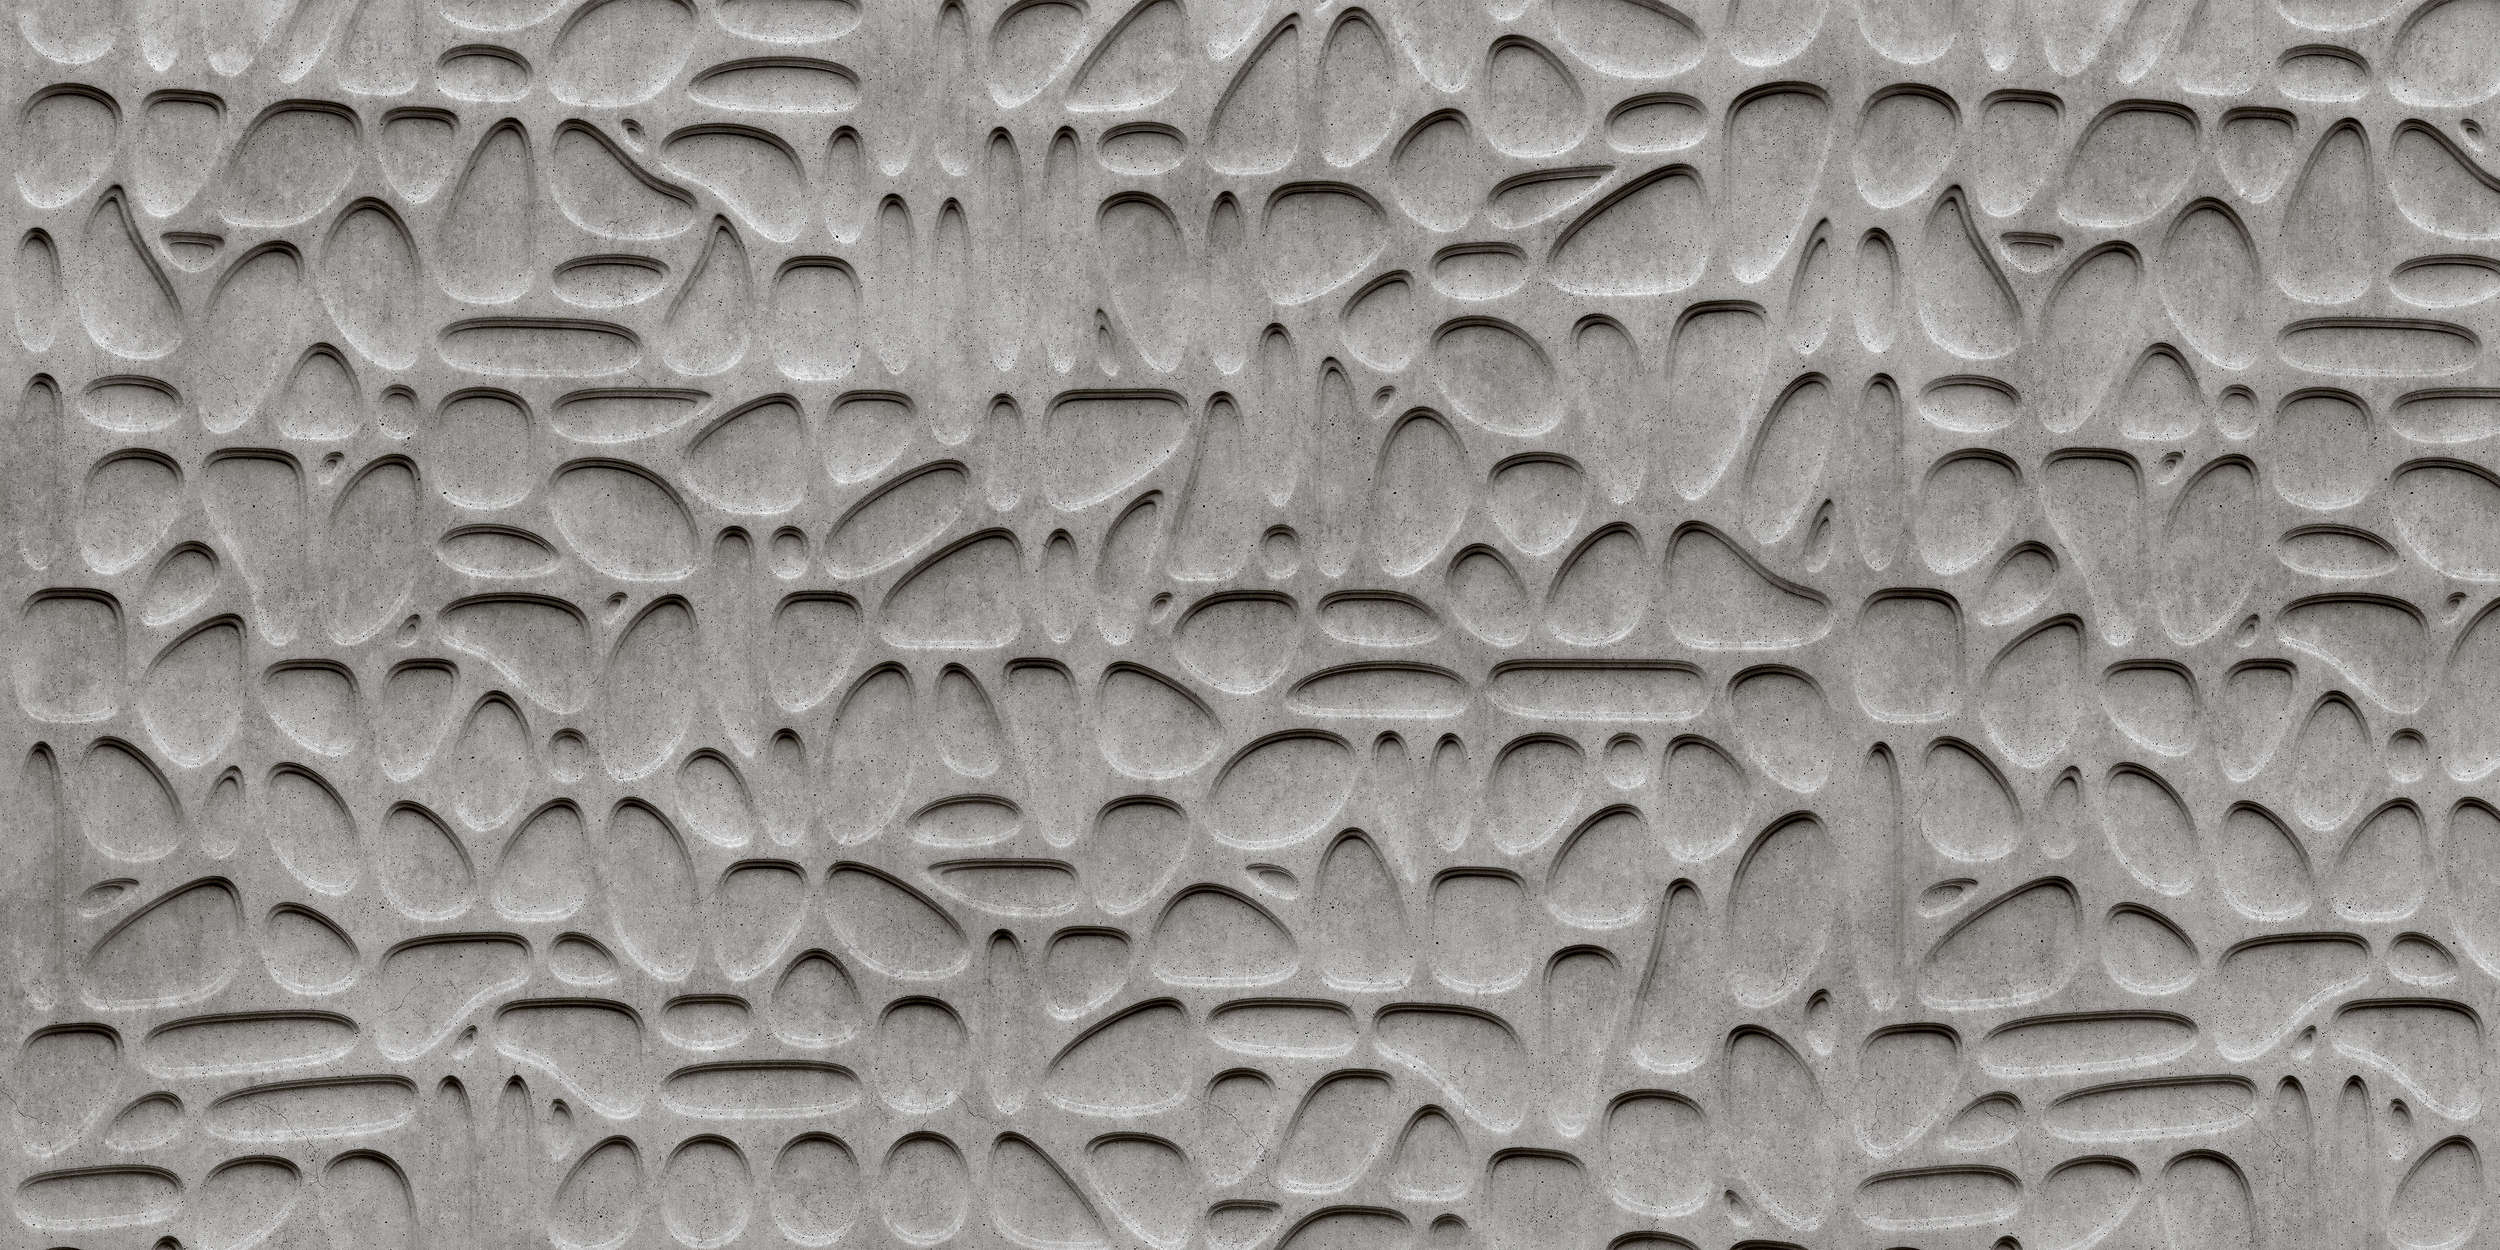             Maze 1 - Coole 3D Beton-Luftblasen Fototapete – Grau, Schwarz | Perlmutt Glattvlies
        